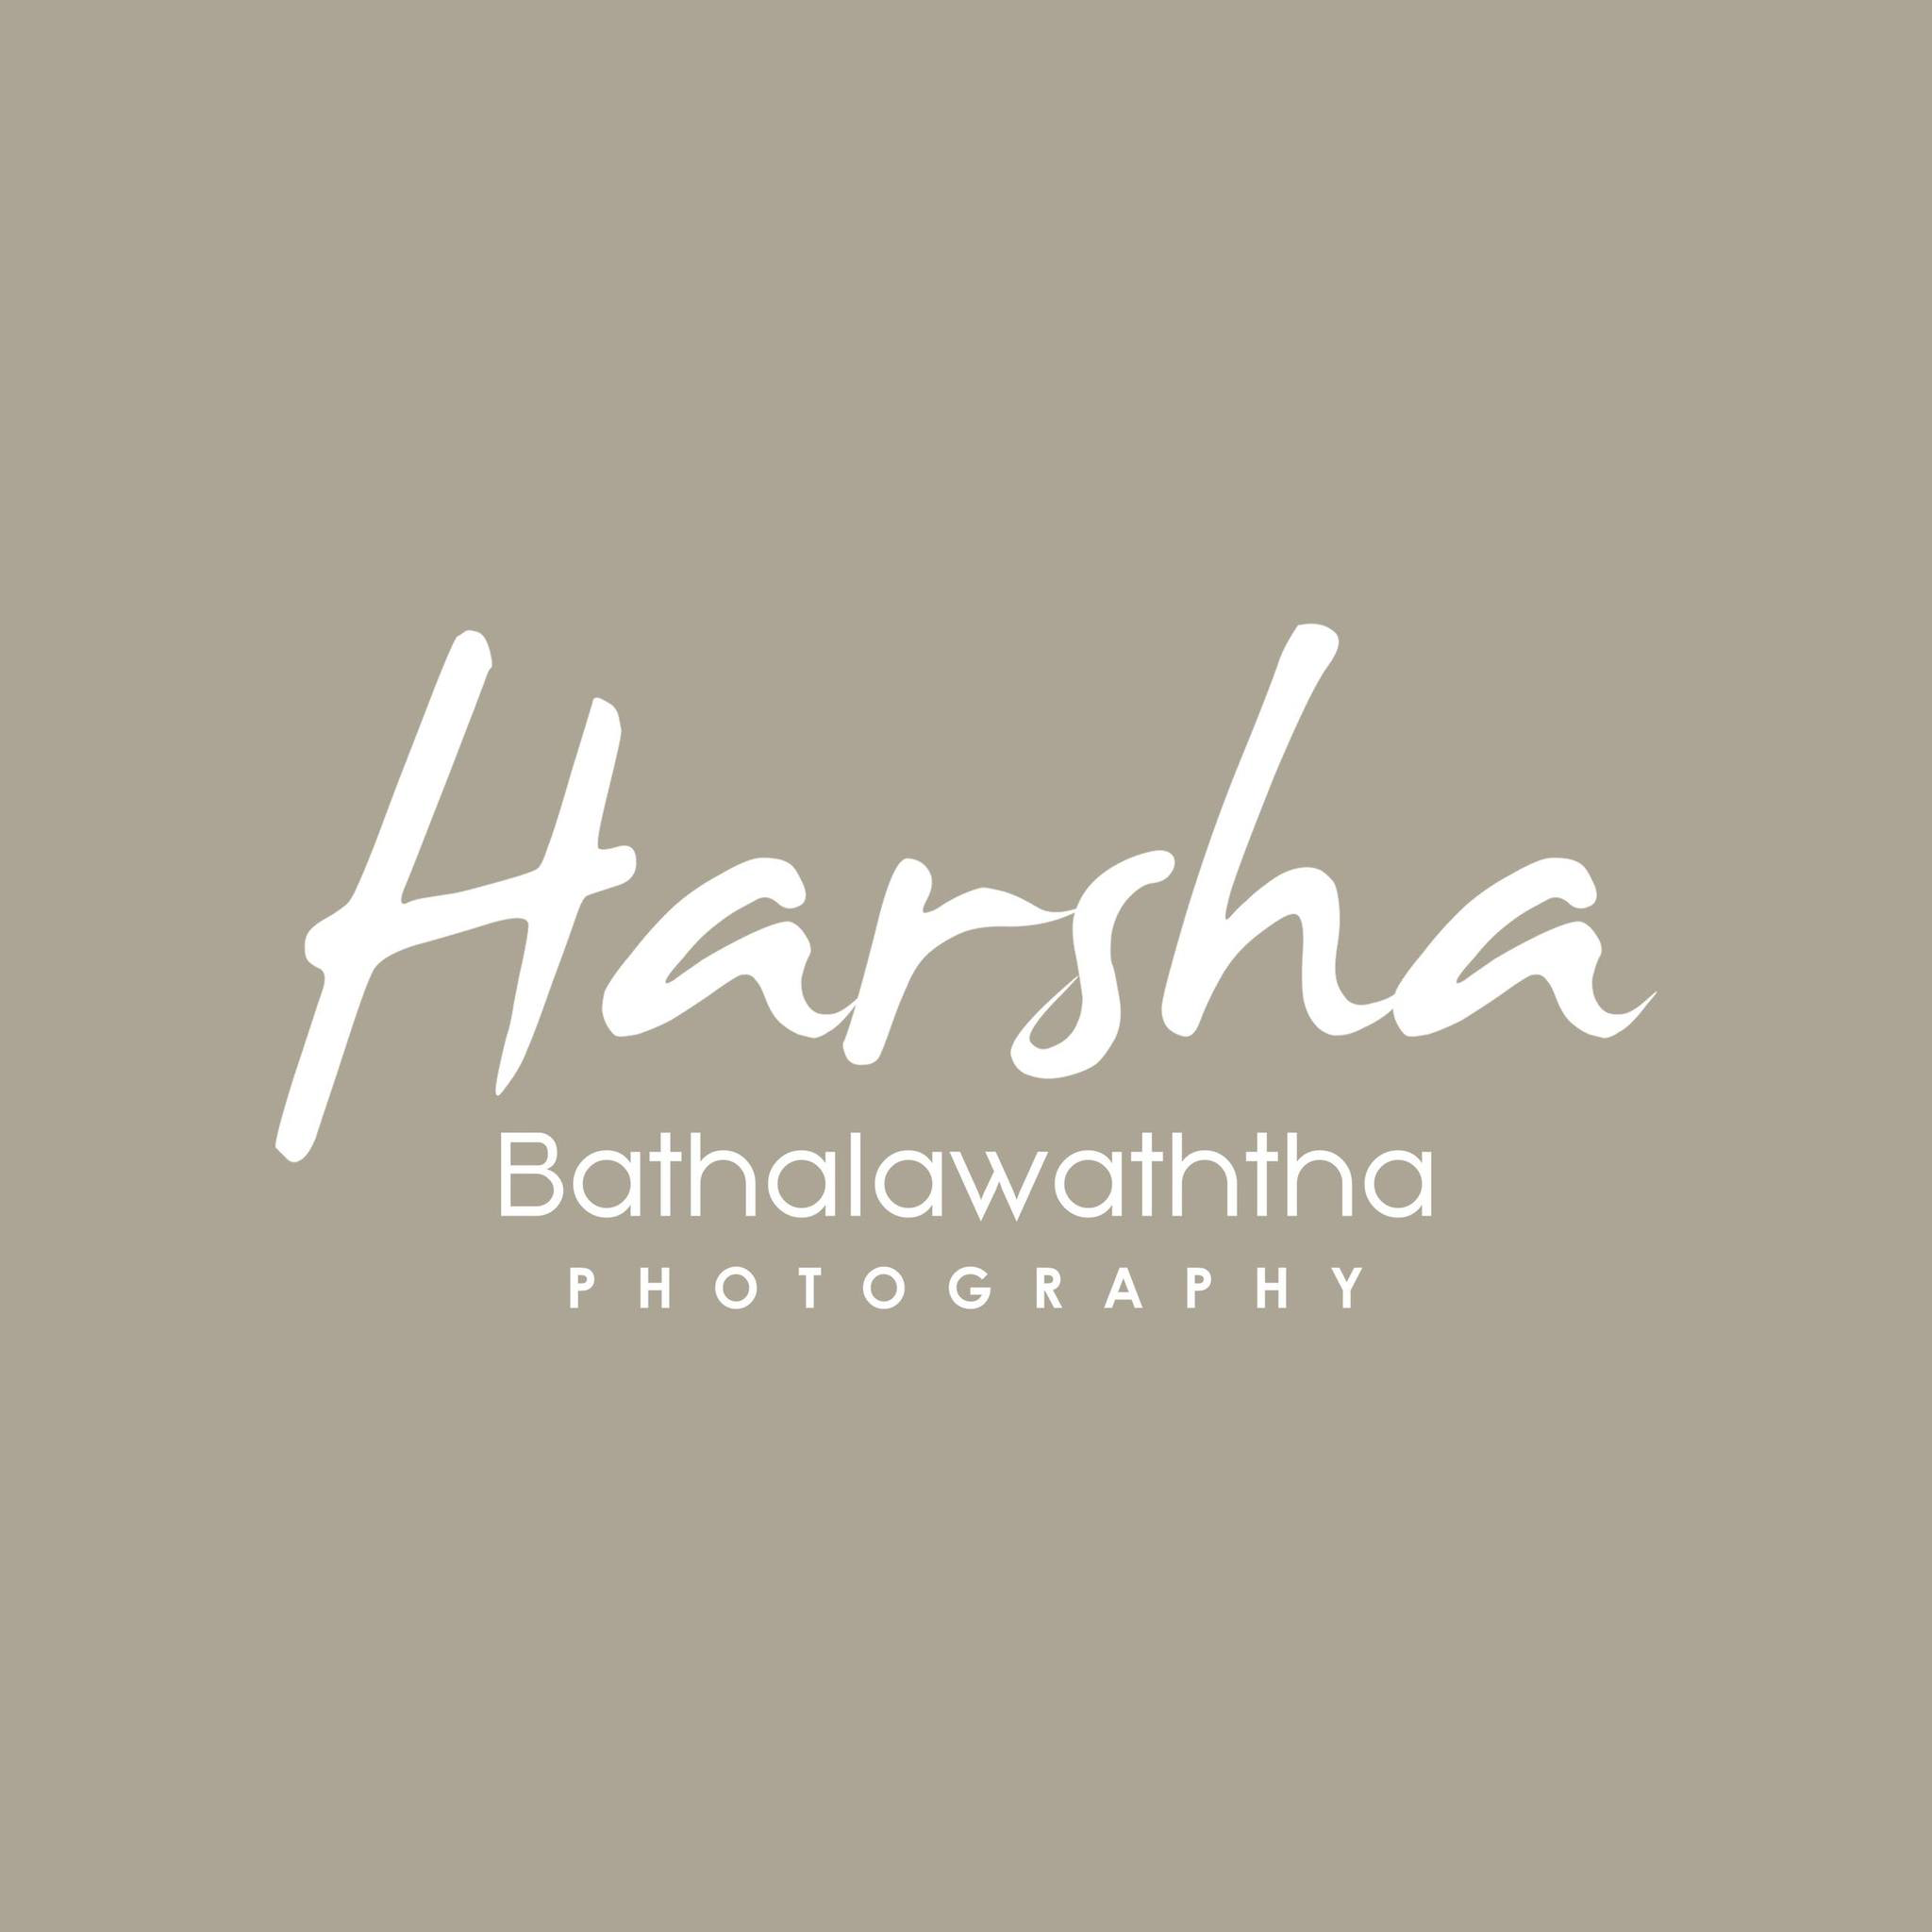 Harsha Bathalawaththa Photography